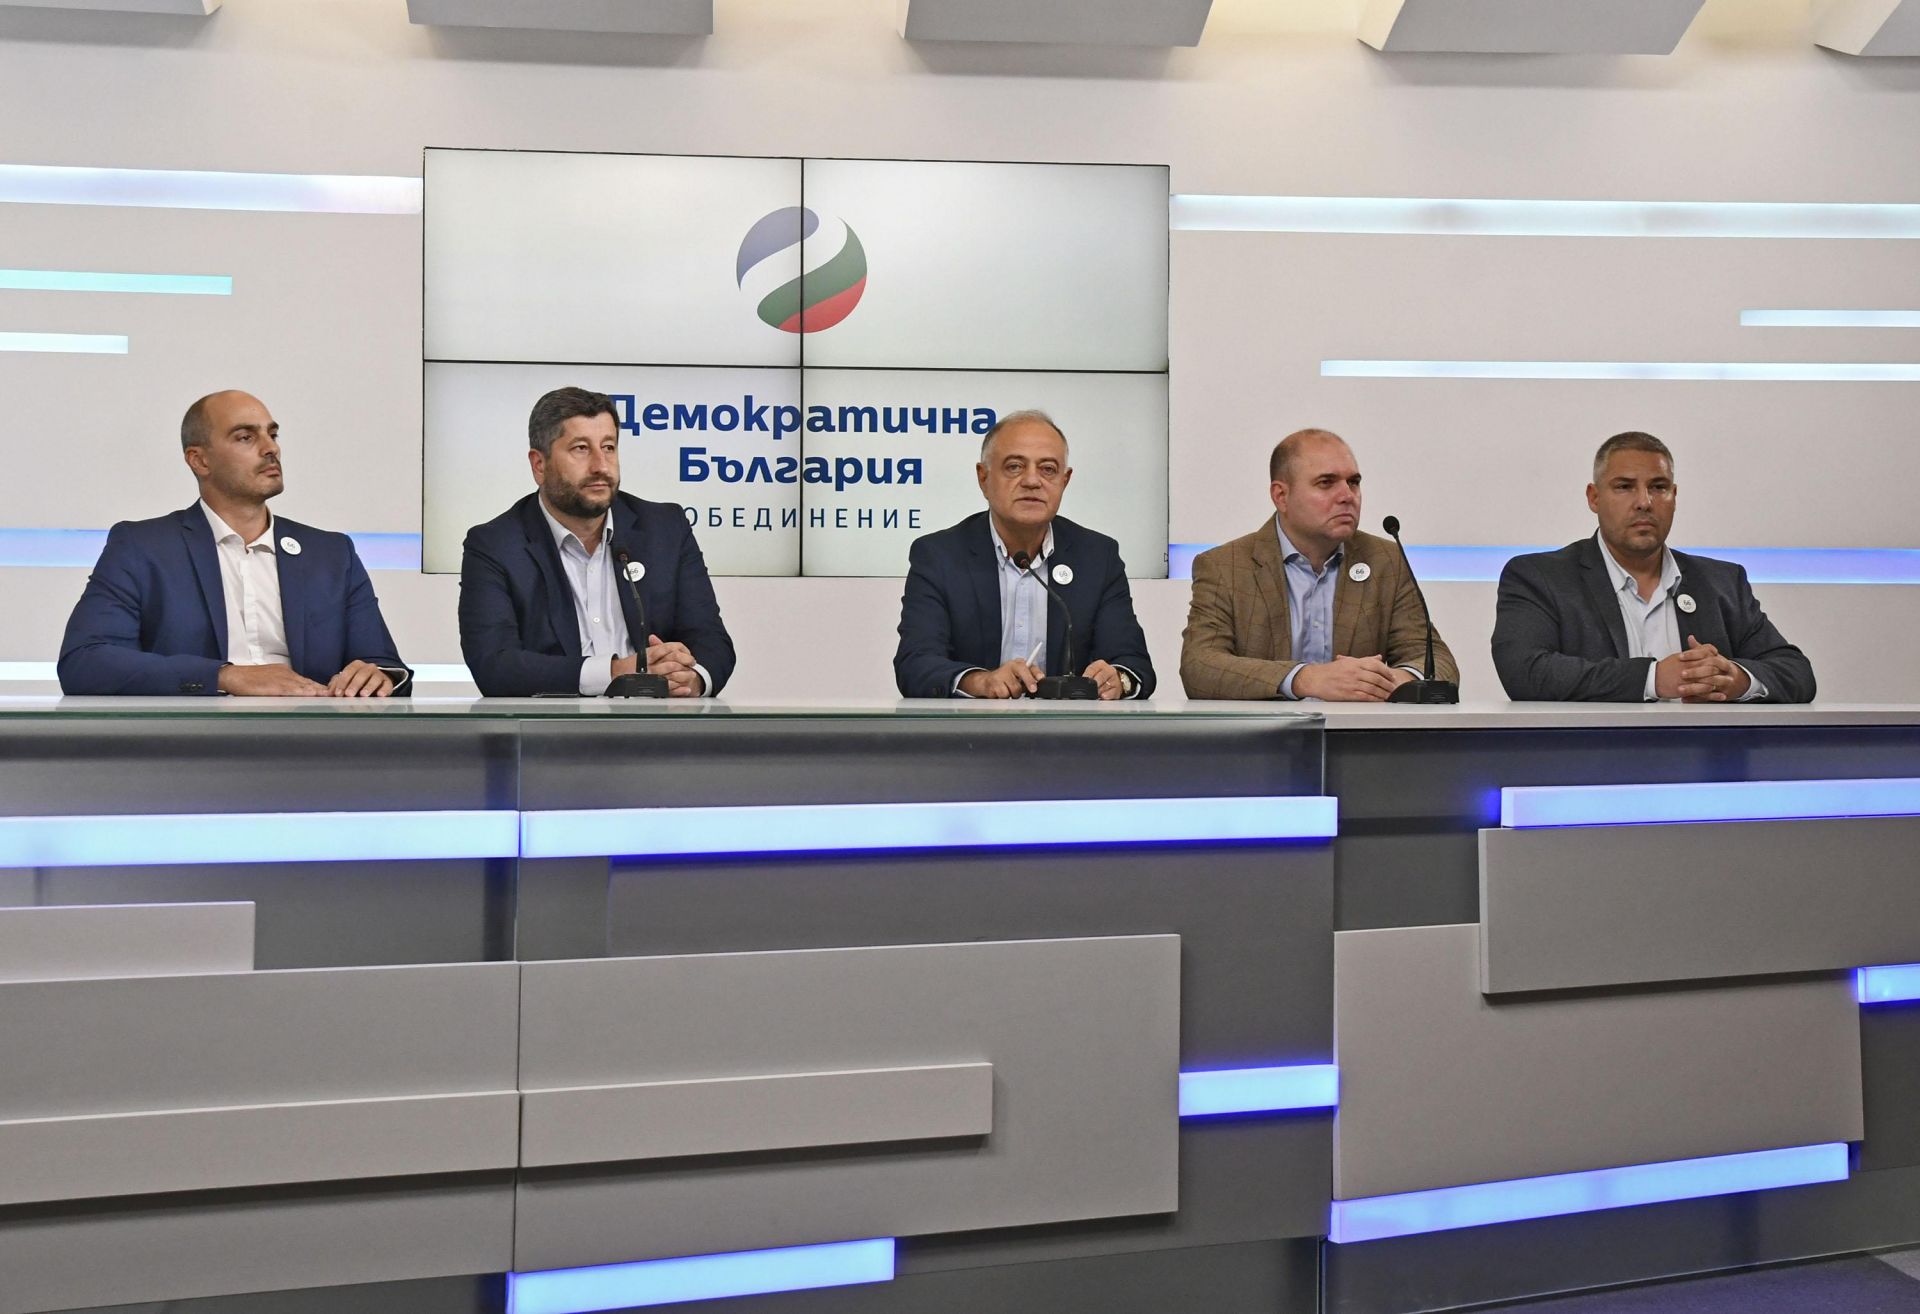 Борислав Игнатов, Христо Иванов, Атанас Атанасов и колегите им иска обединение с гражданската организация